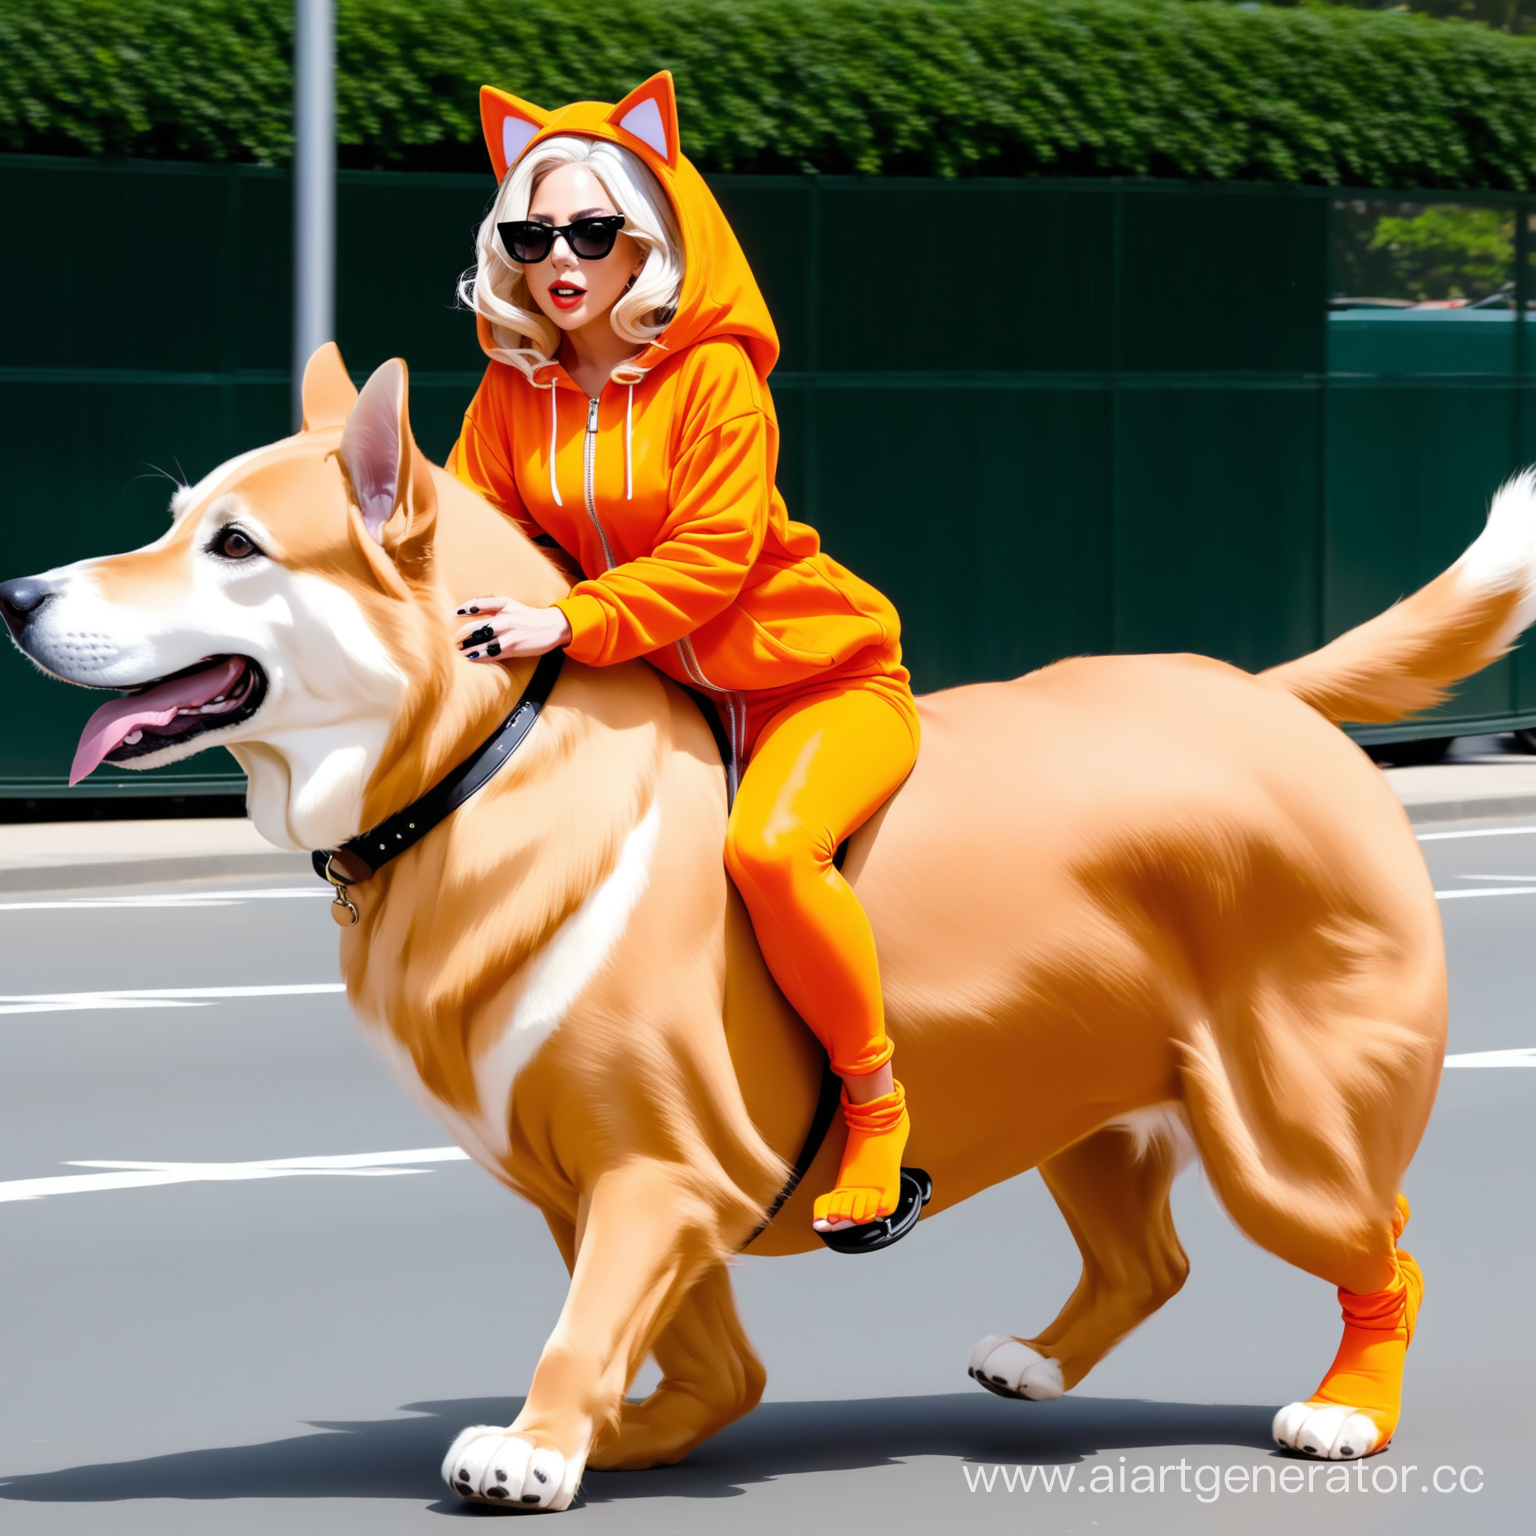 Lady Gaga is wearing orange cat costume, while riding a big dog